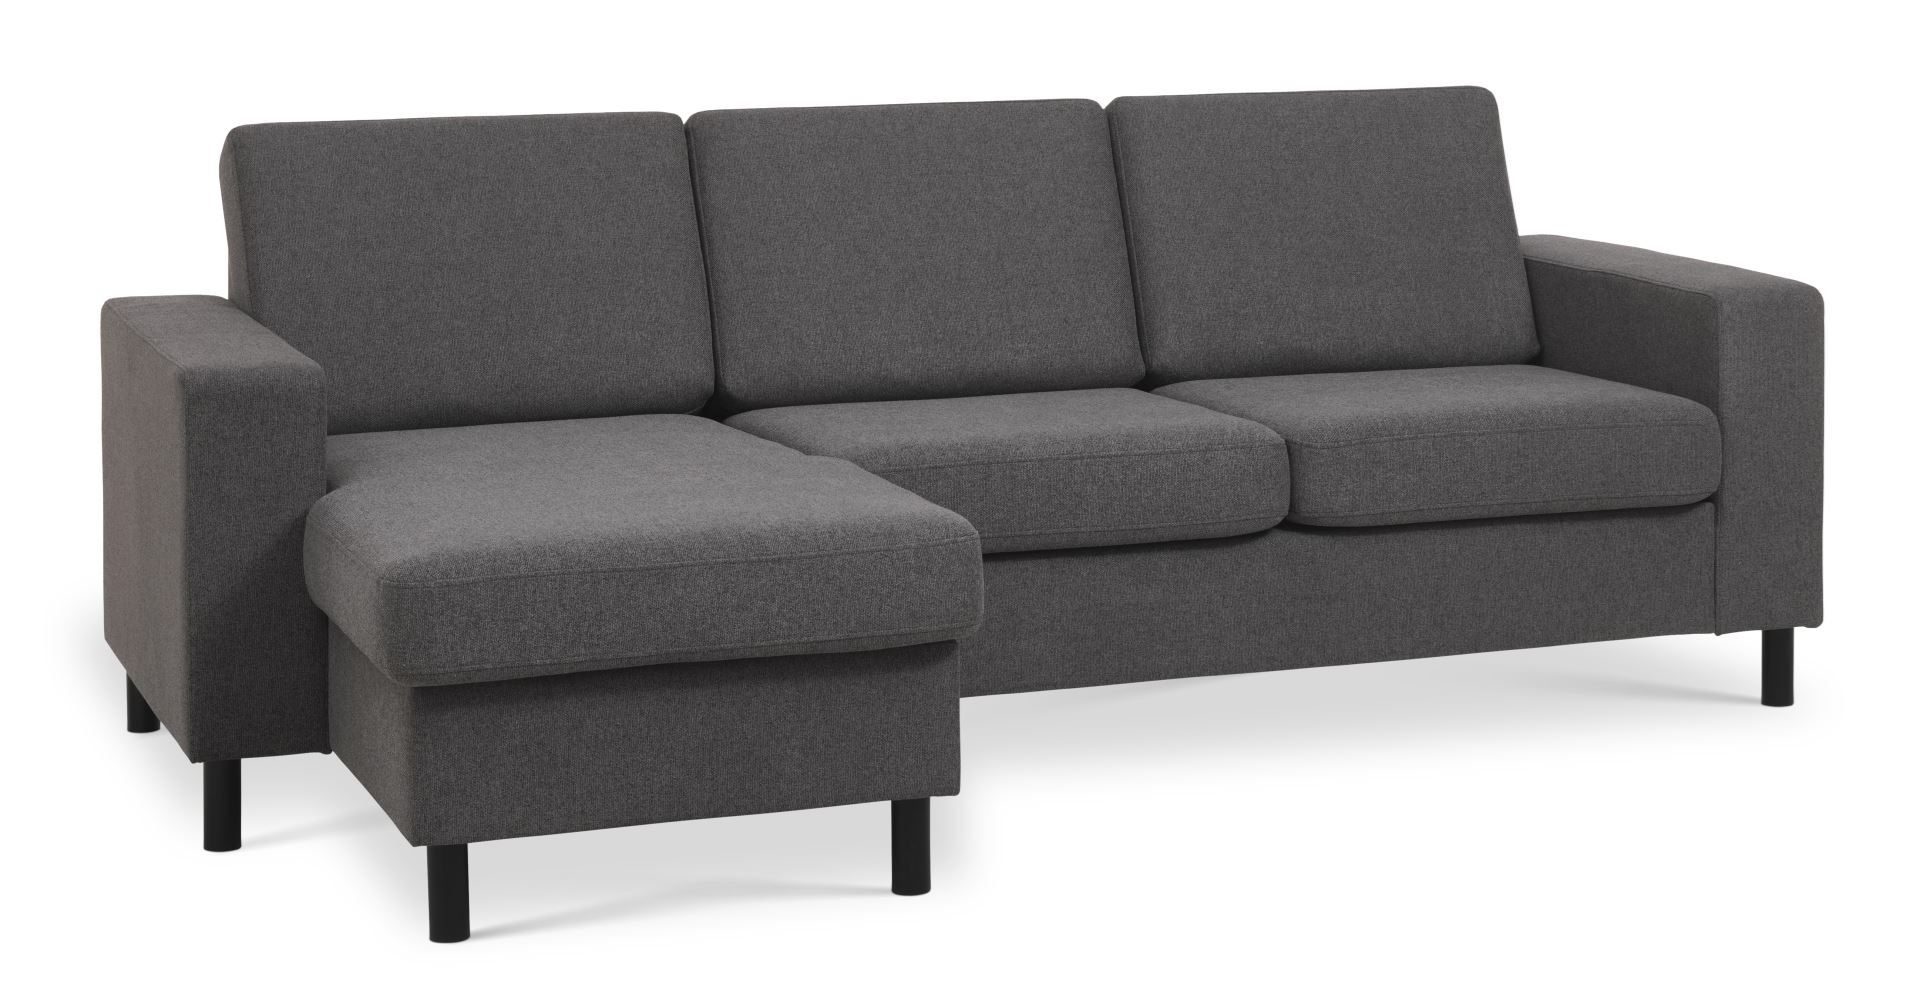 Pan set 1 3D sofa med chaiselong - antracitgrå polyester stof og sort træ